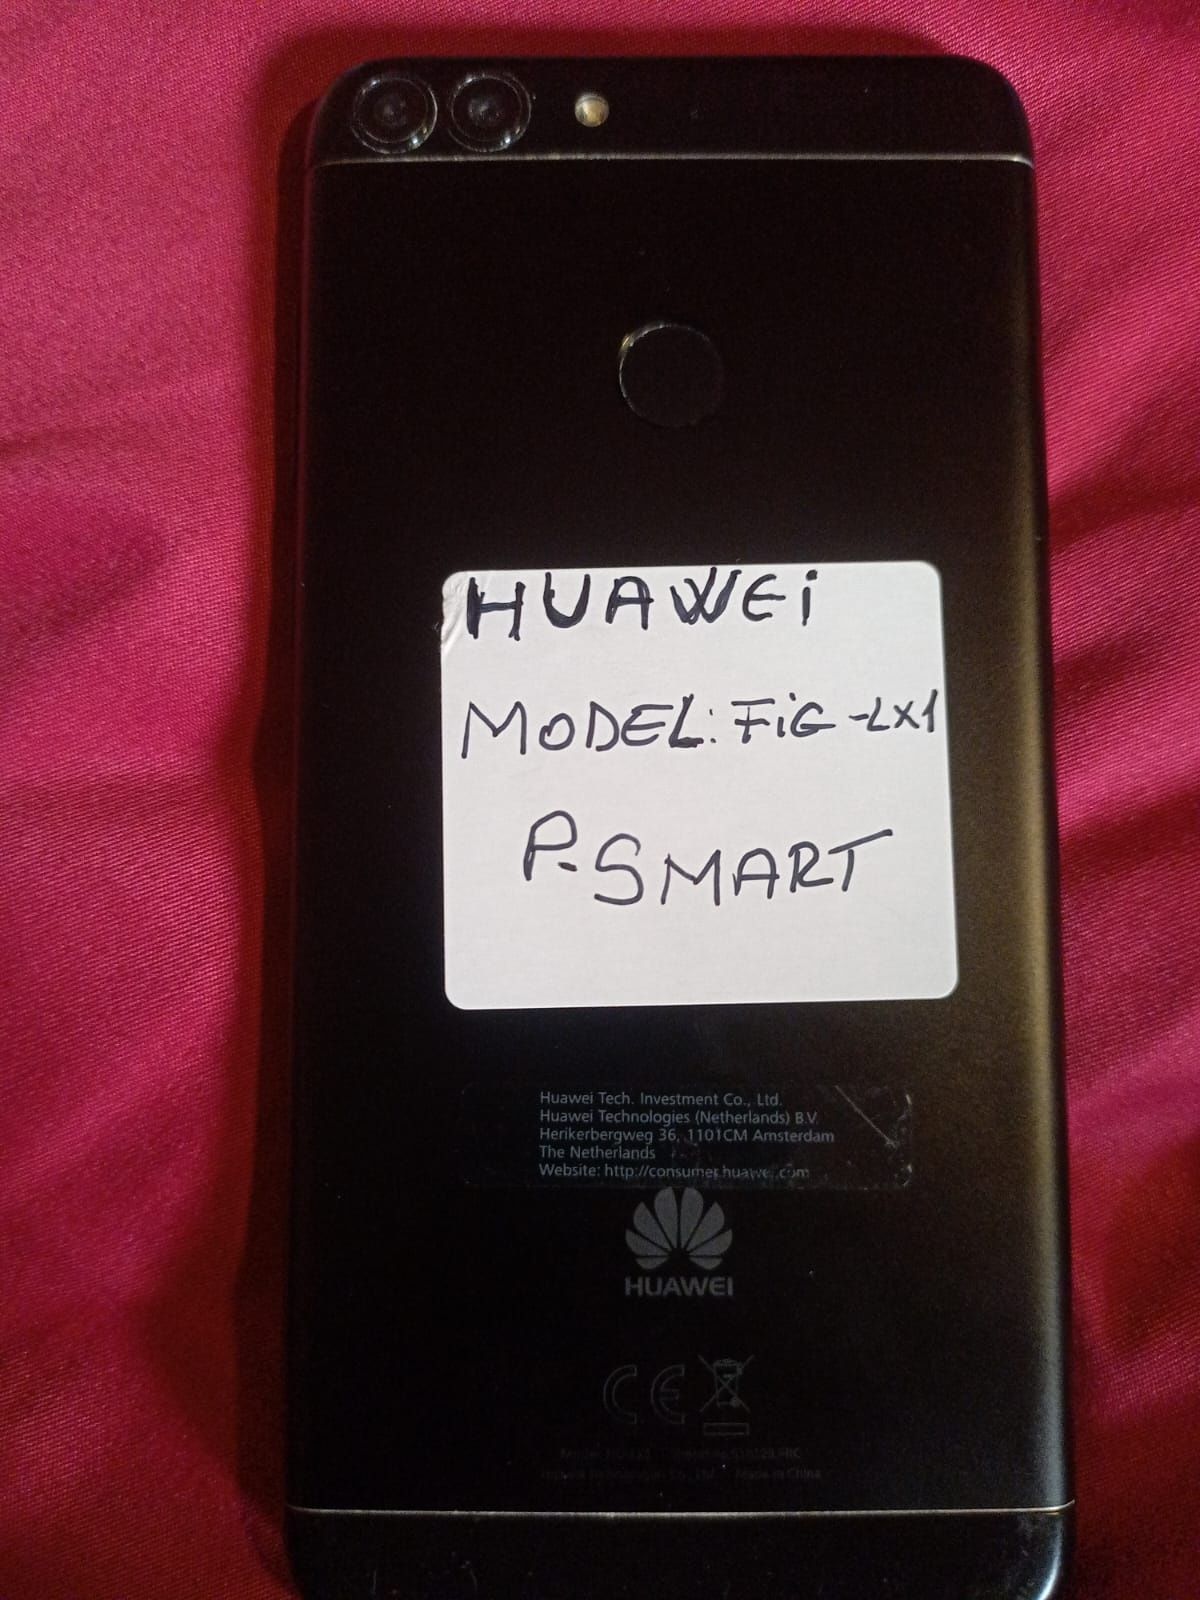 huawei p9 lite +p smart model:fig Lx1